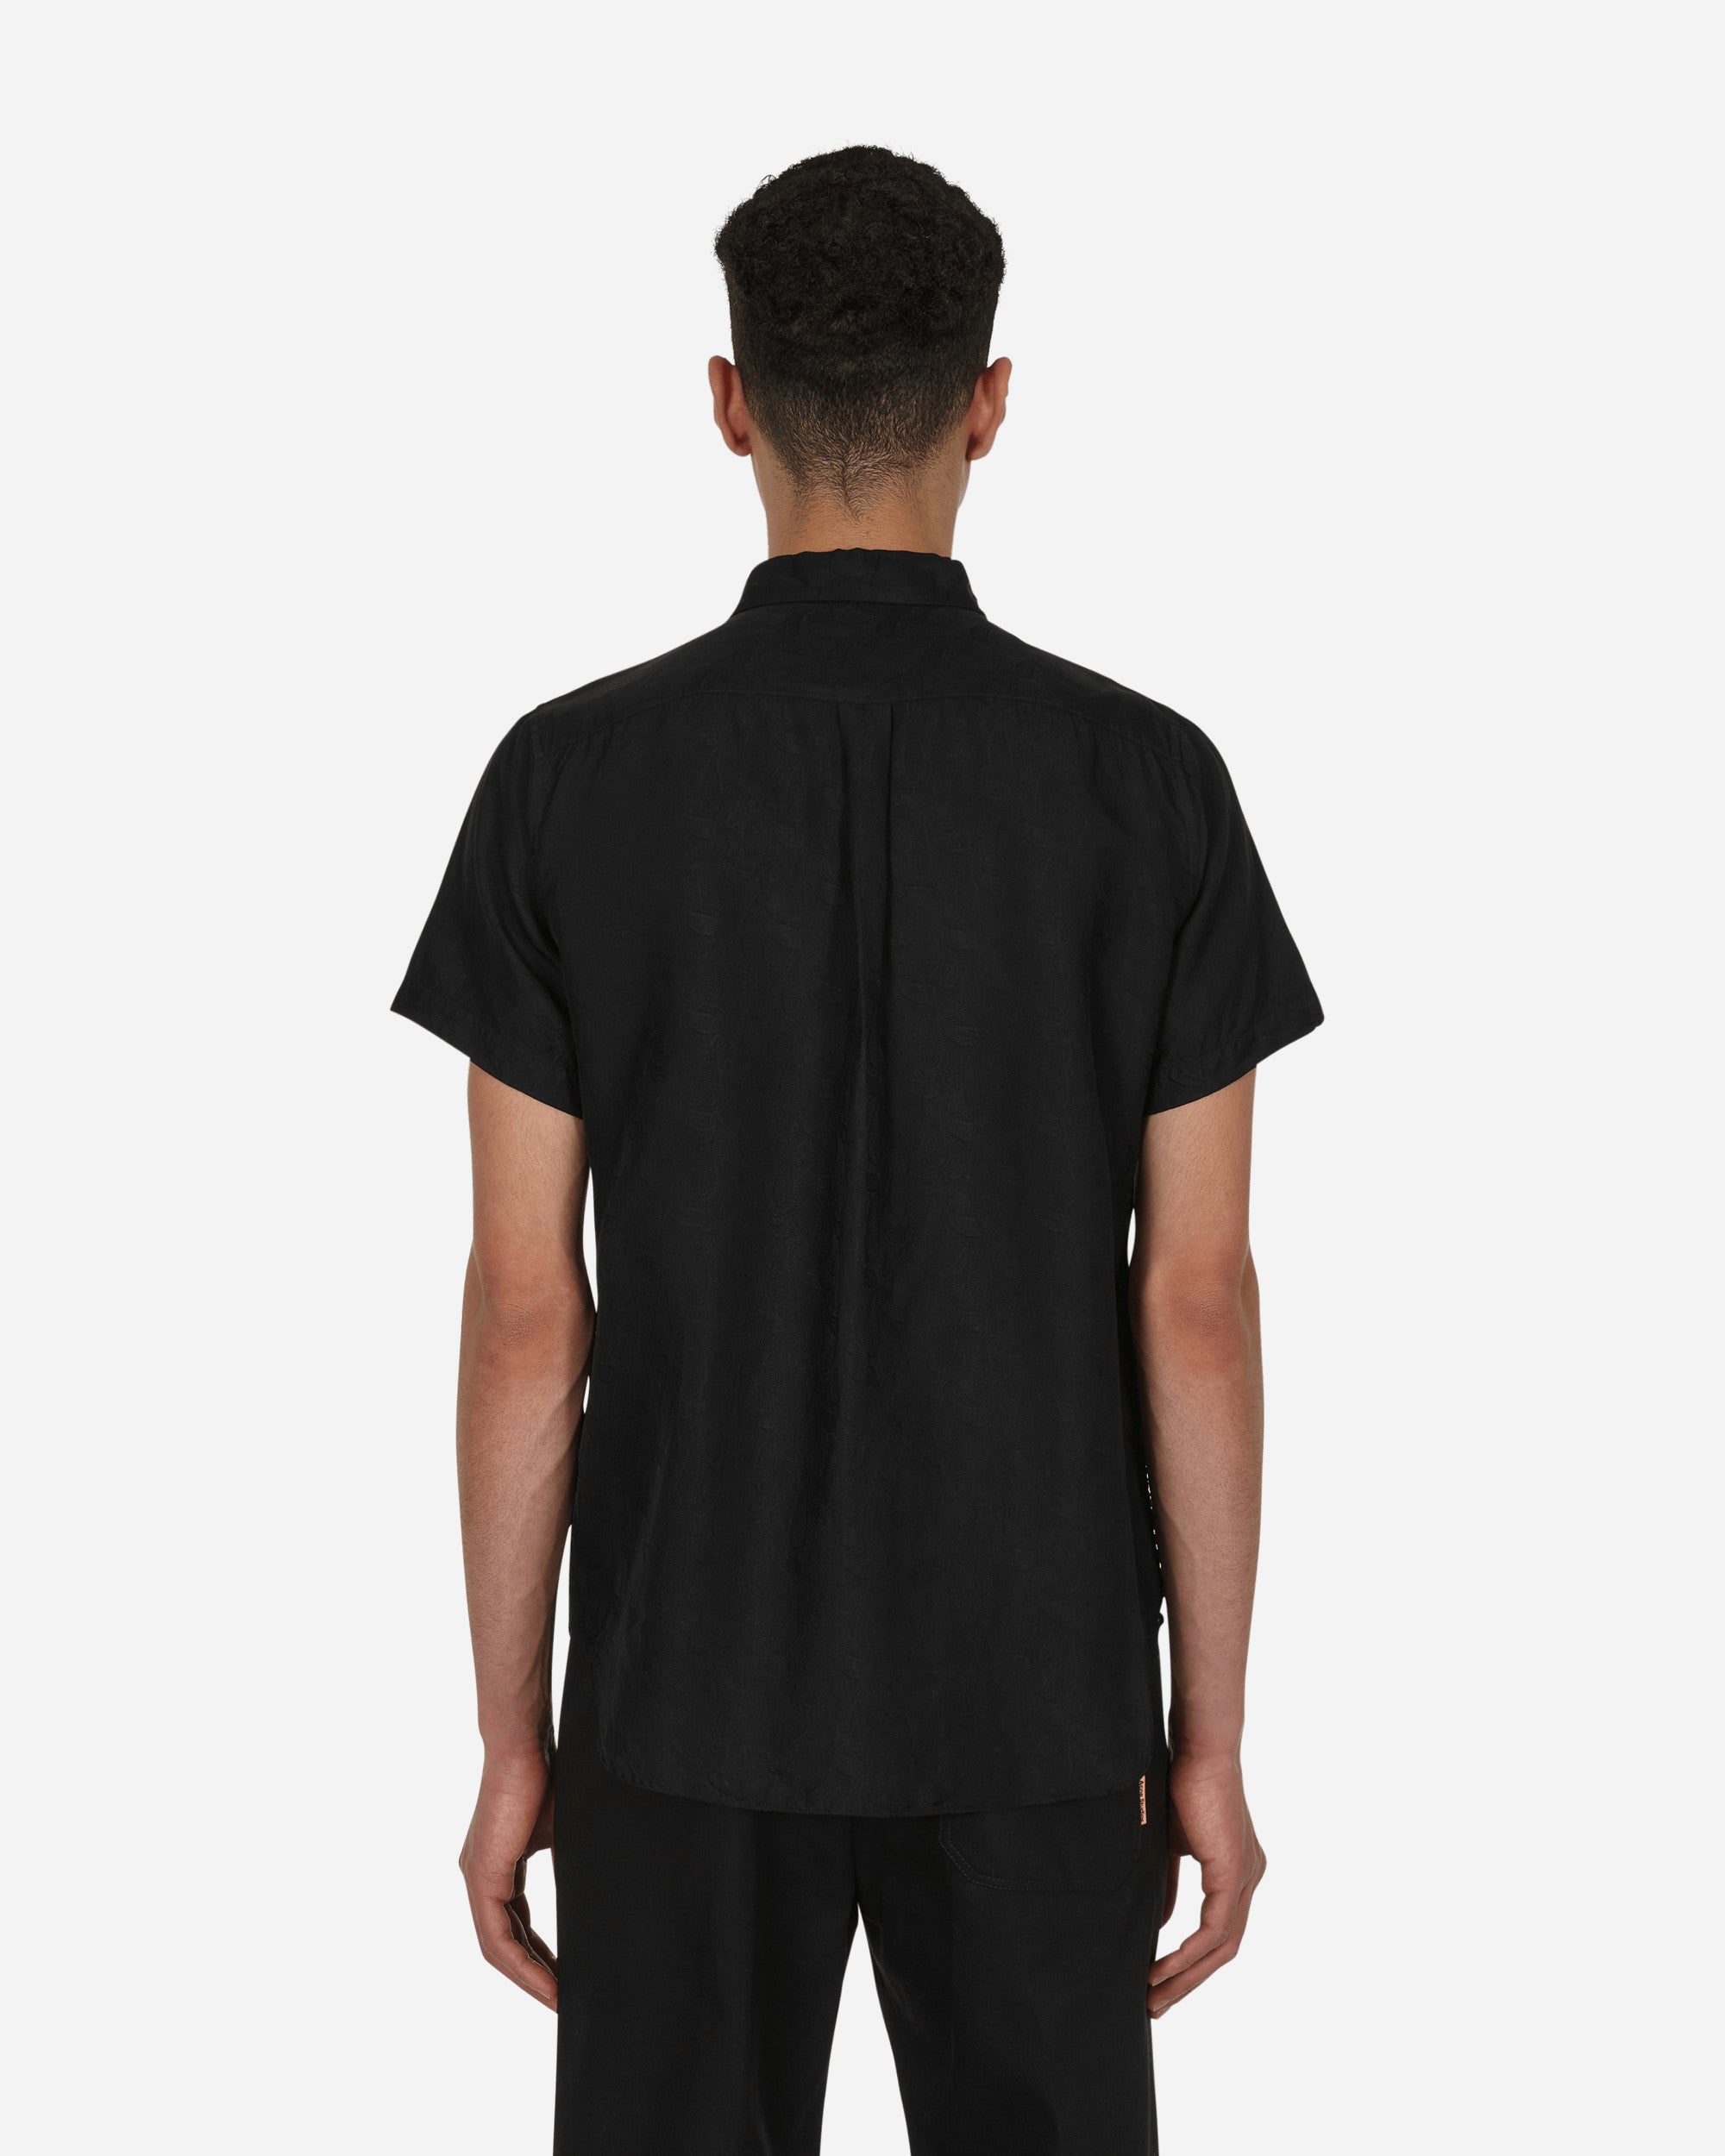 Comme Des Garçons Black Blouse Black Shirts Longsleeve 1I-B018-S22 1